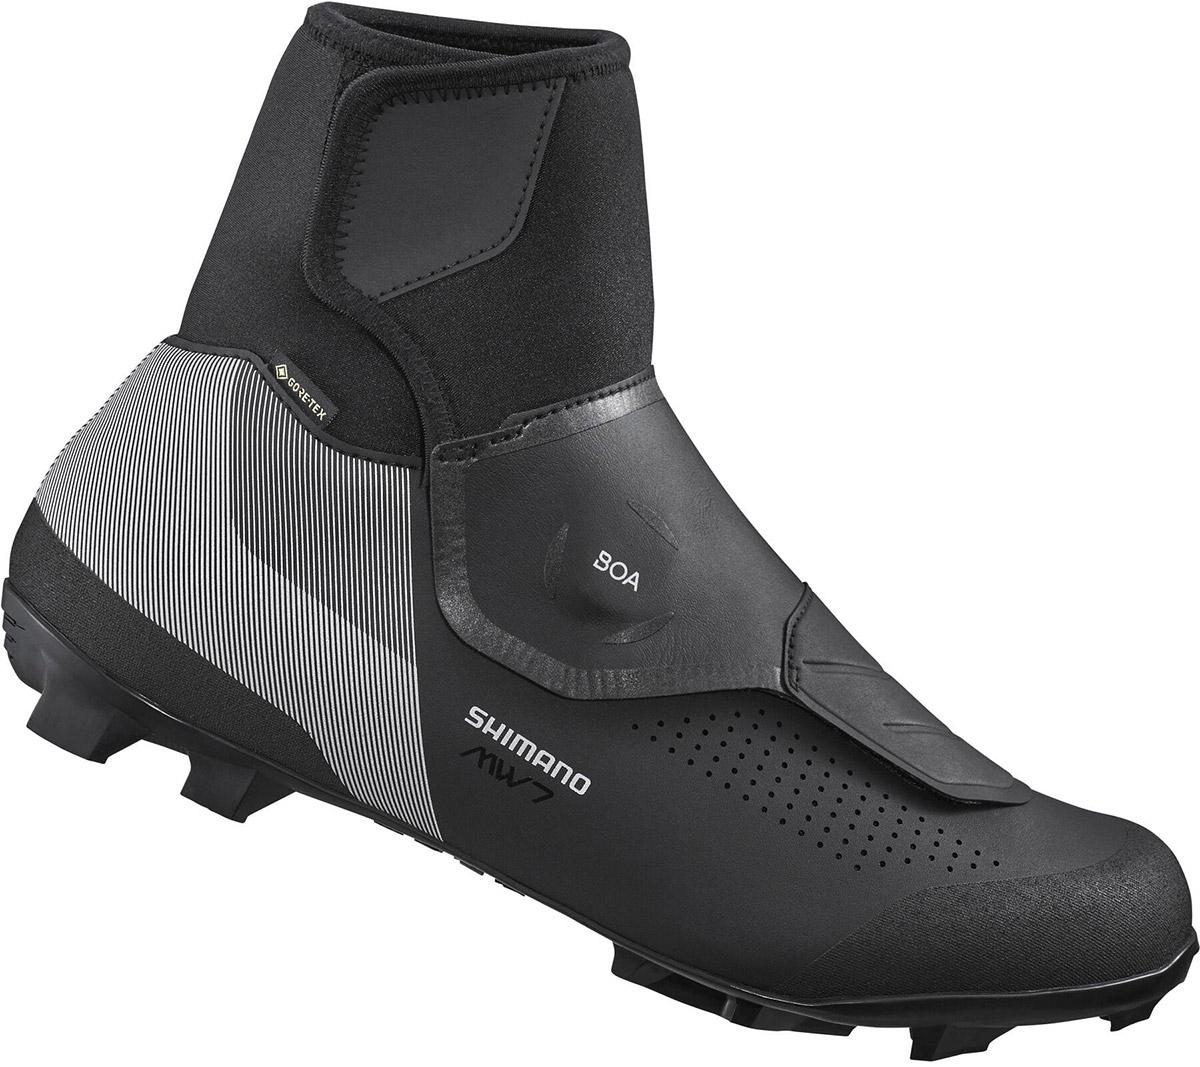 Shimano Mw702 Xc Winter Boot - Black